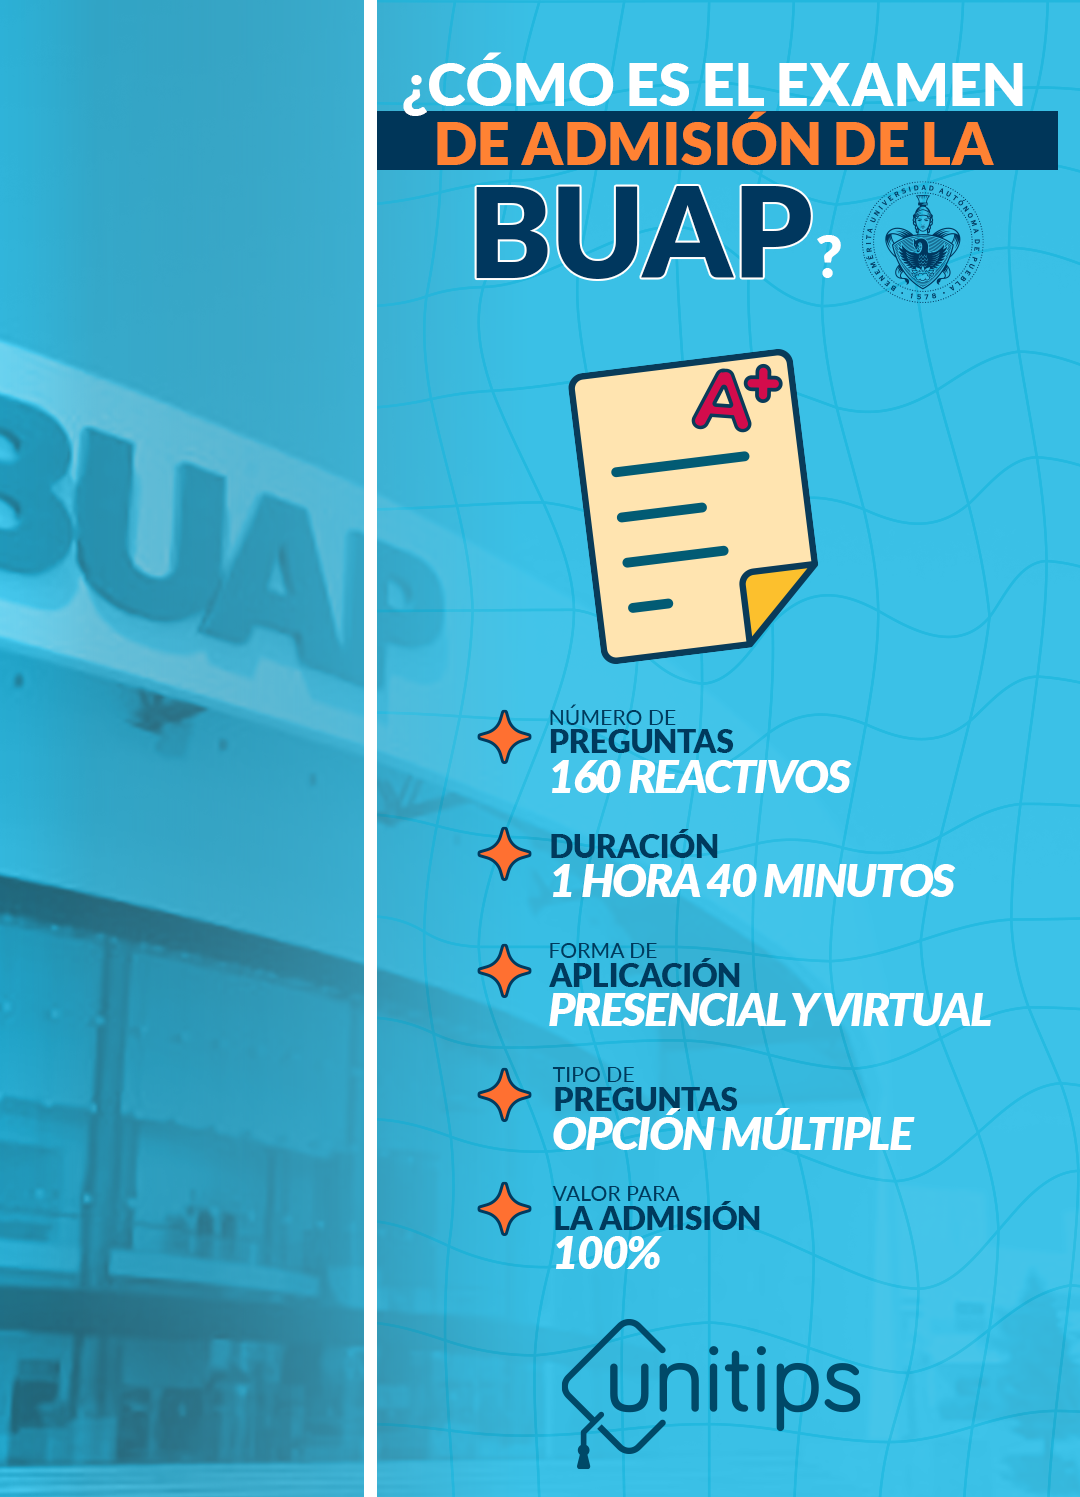 Imagen-interna-Examen-BUAP